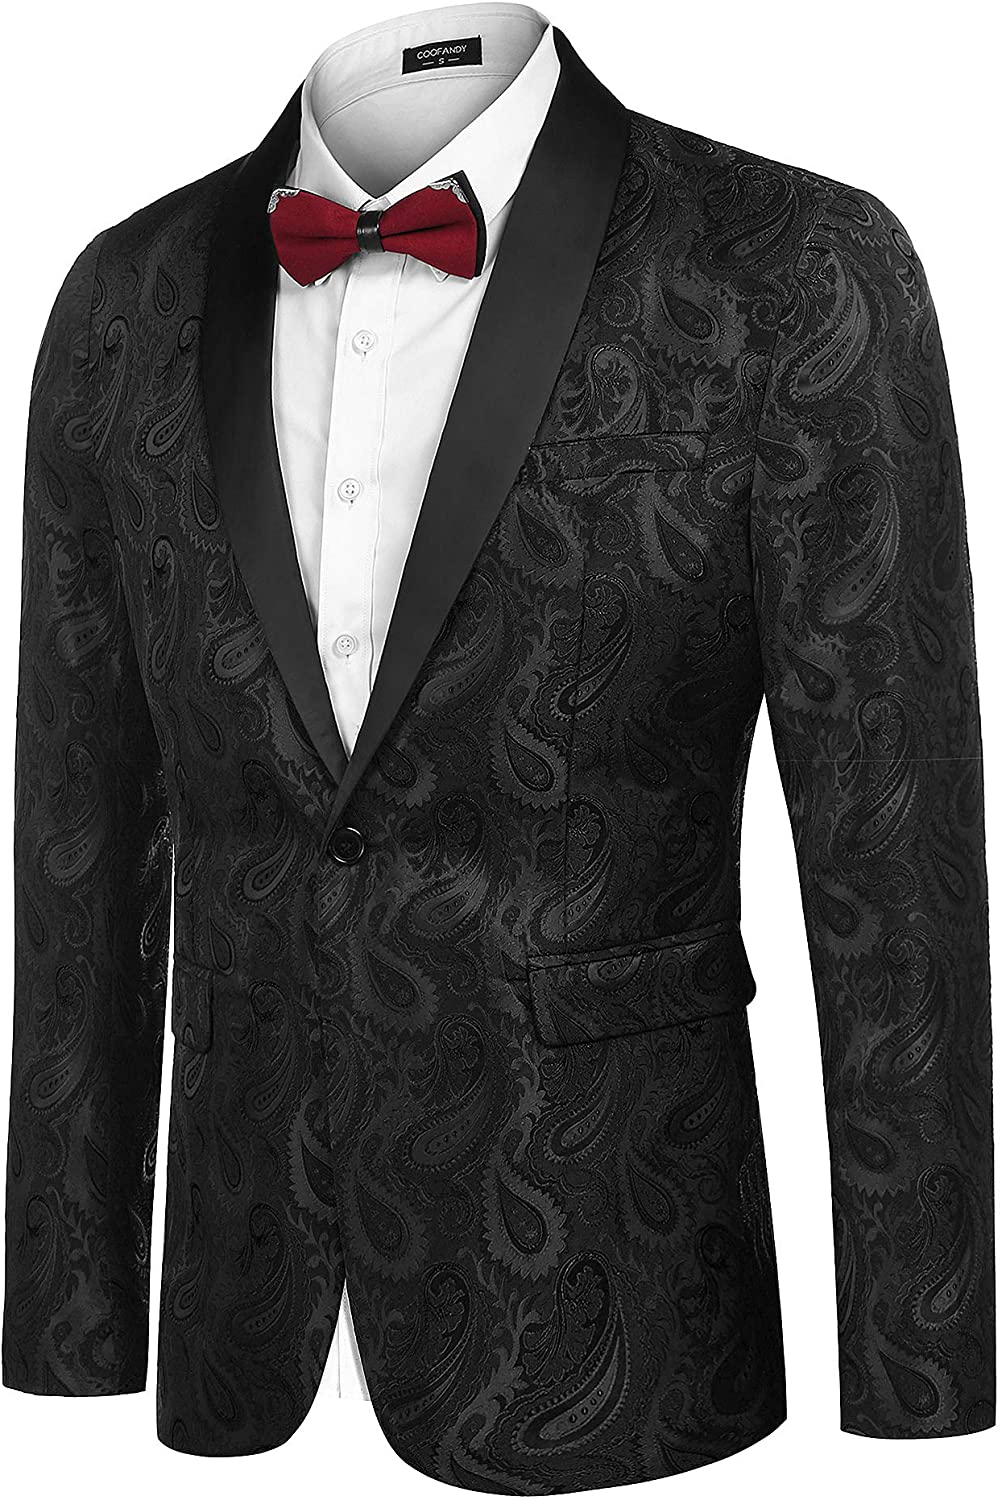 COOFANDY Mens Floral Tuxedo Jacket Paisley Shawl Lapel Suit Blazer ...